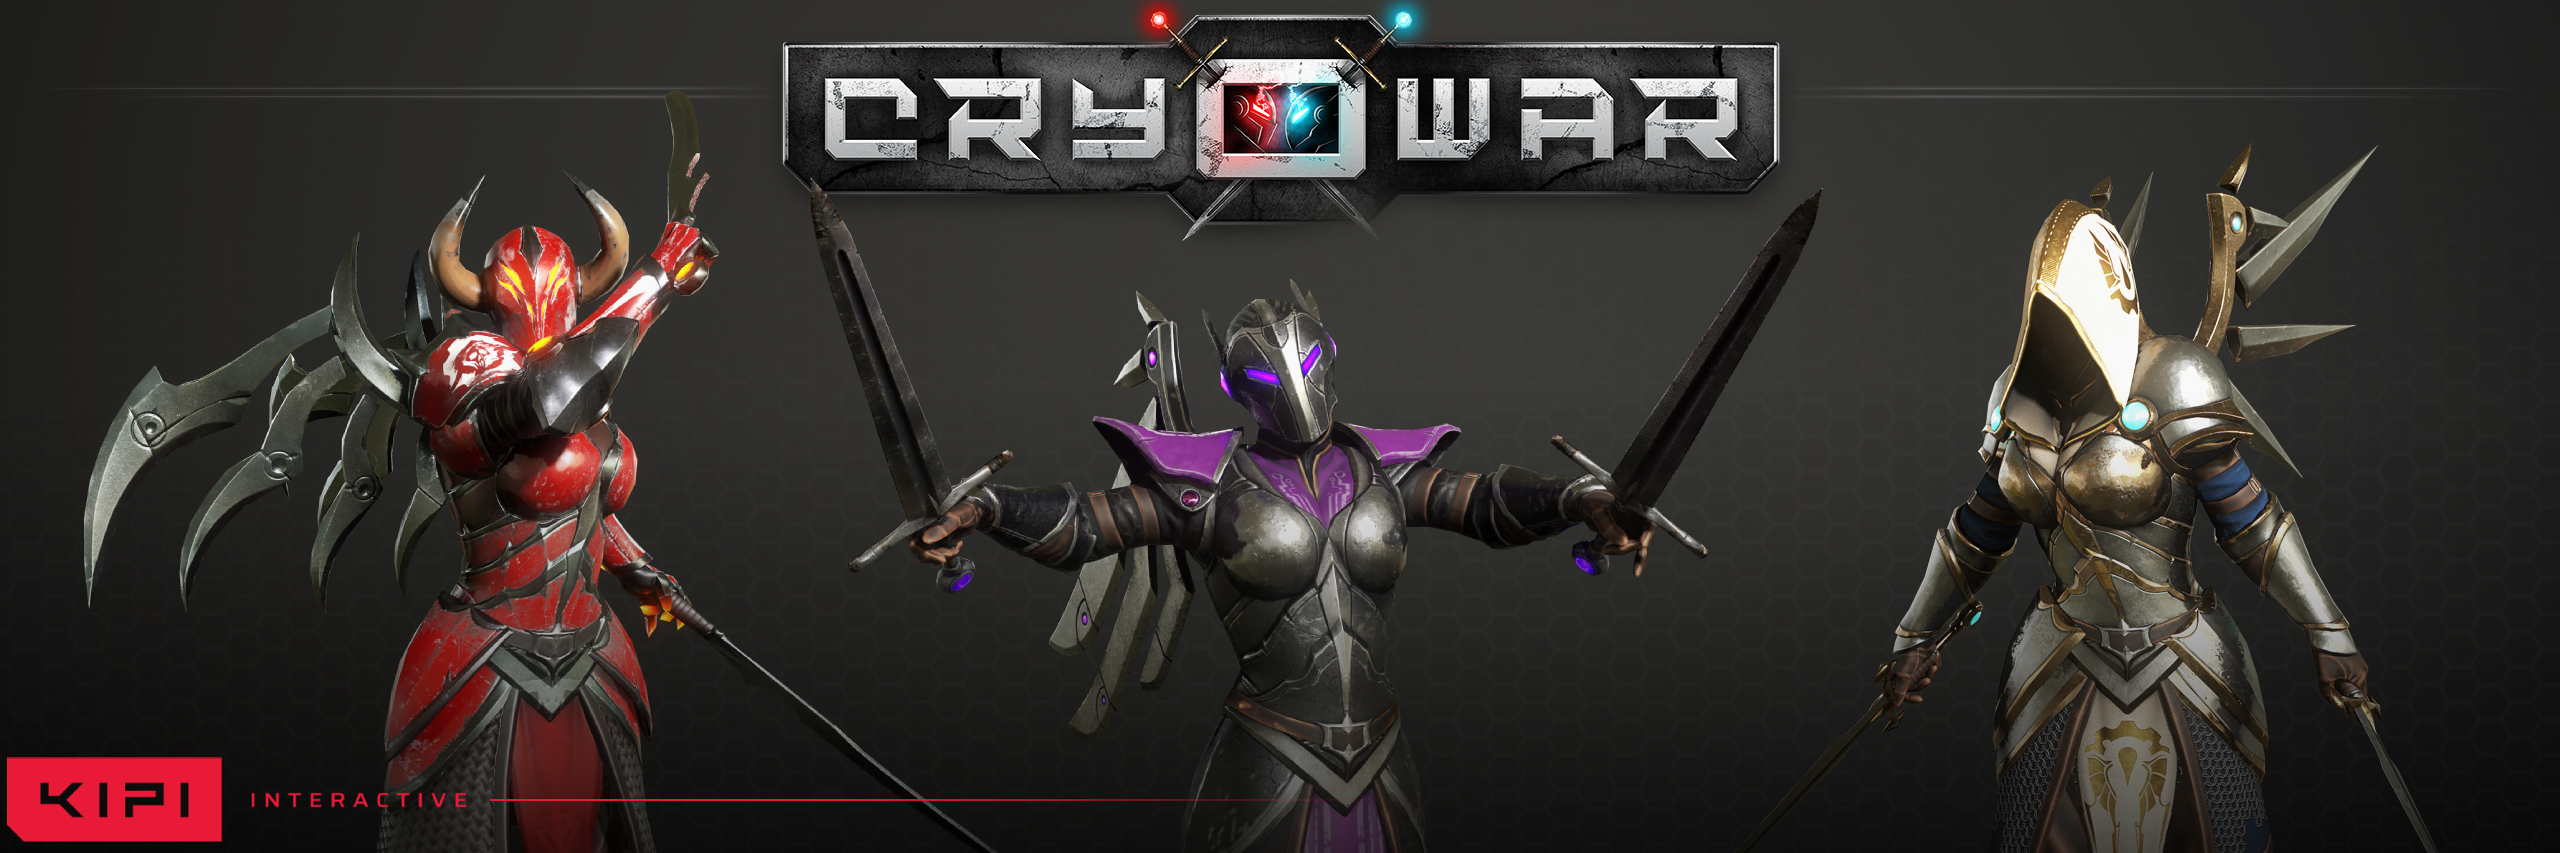 Cryowar Character Rig and Animation